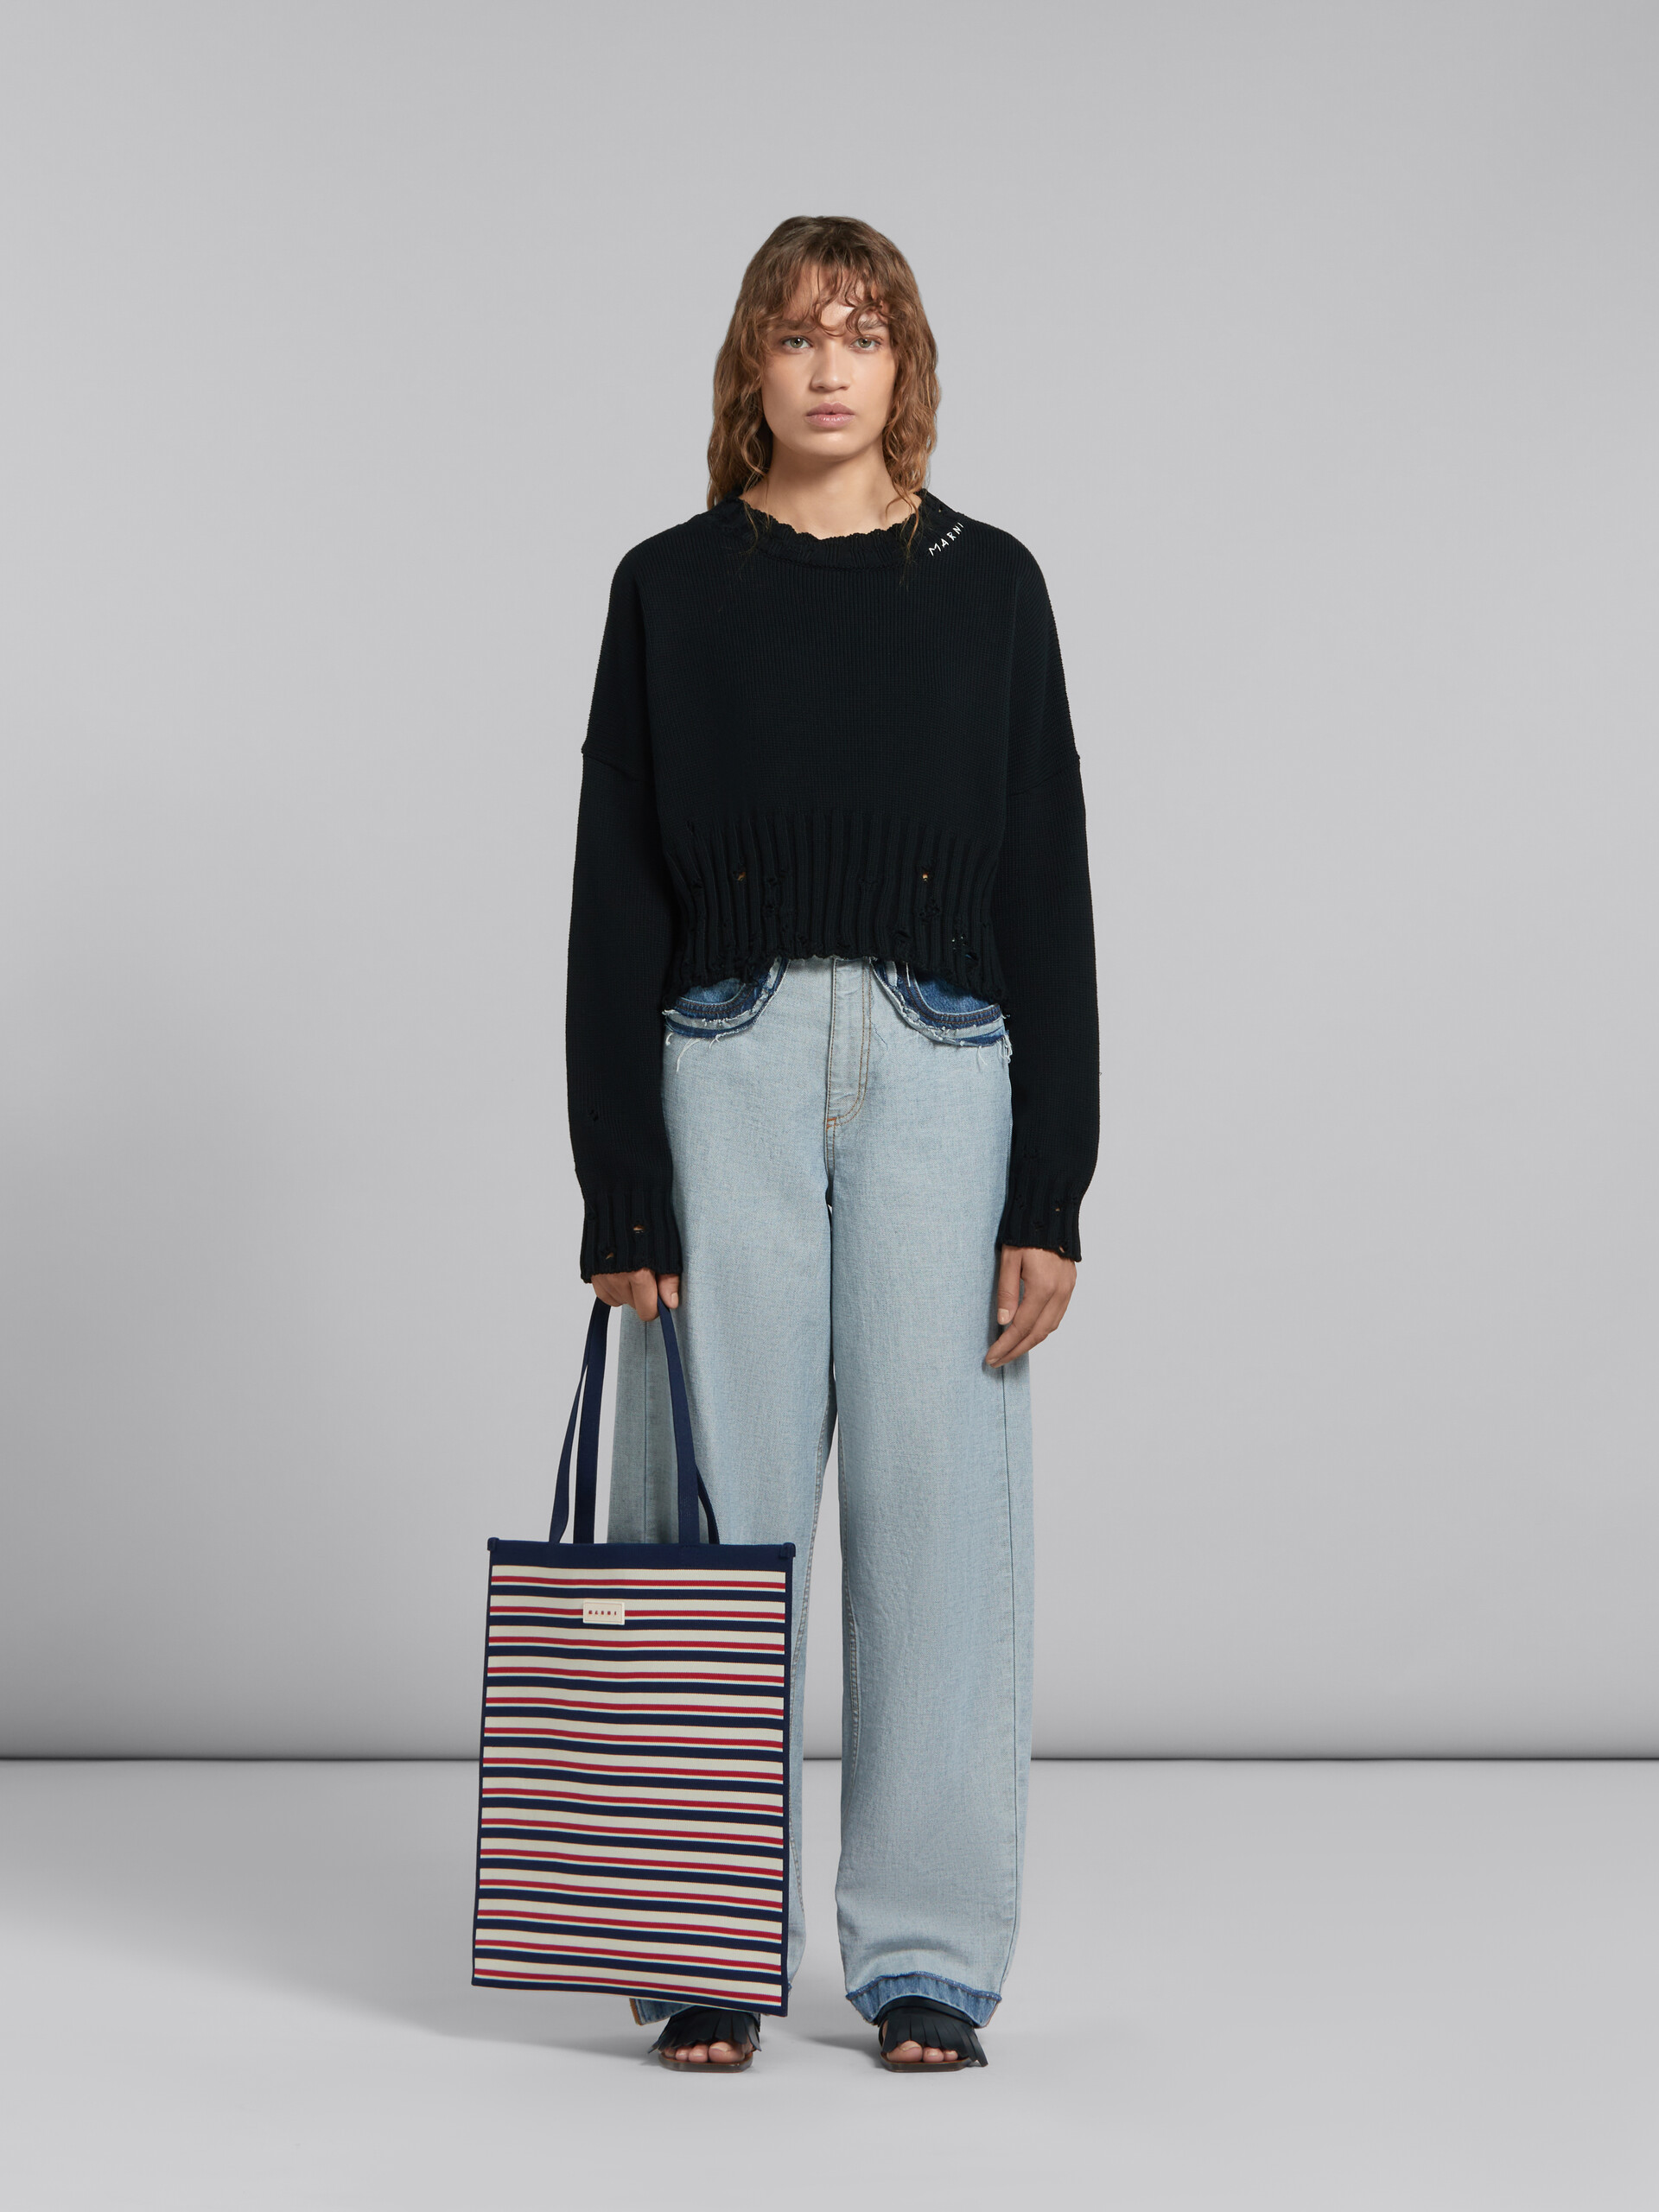 Tote Bag in jacquard a righe blu, bianche e rosse - Borse shopping - Image 2